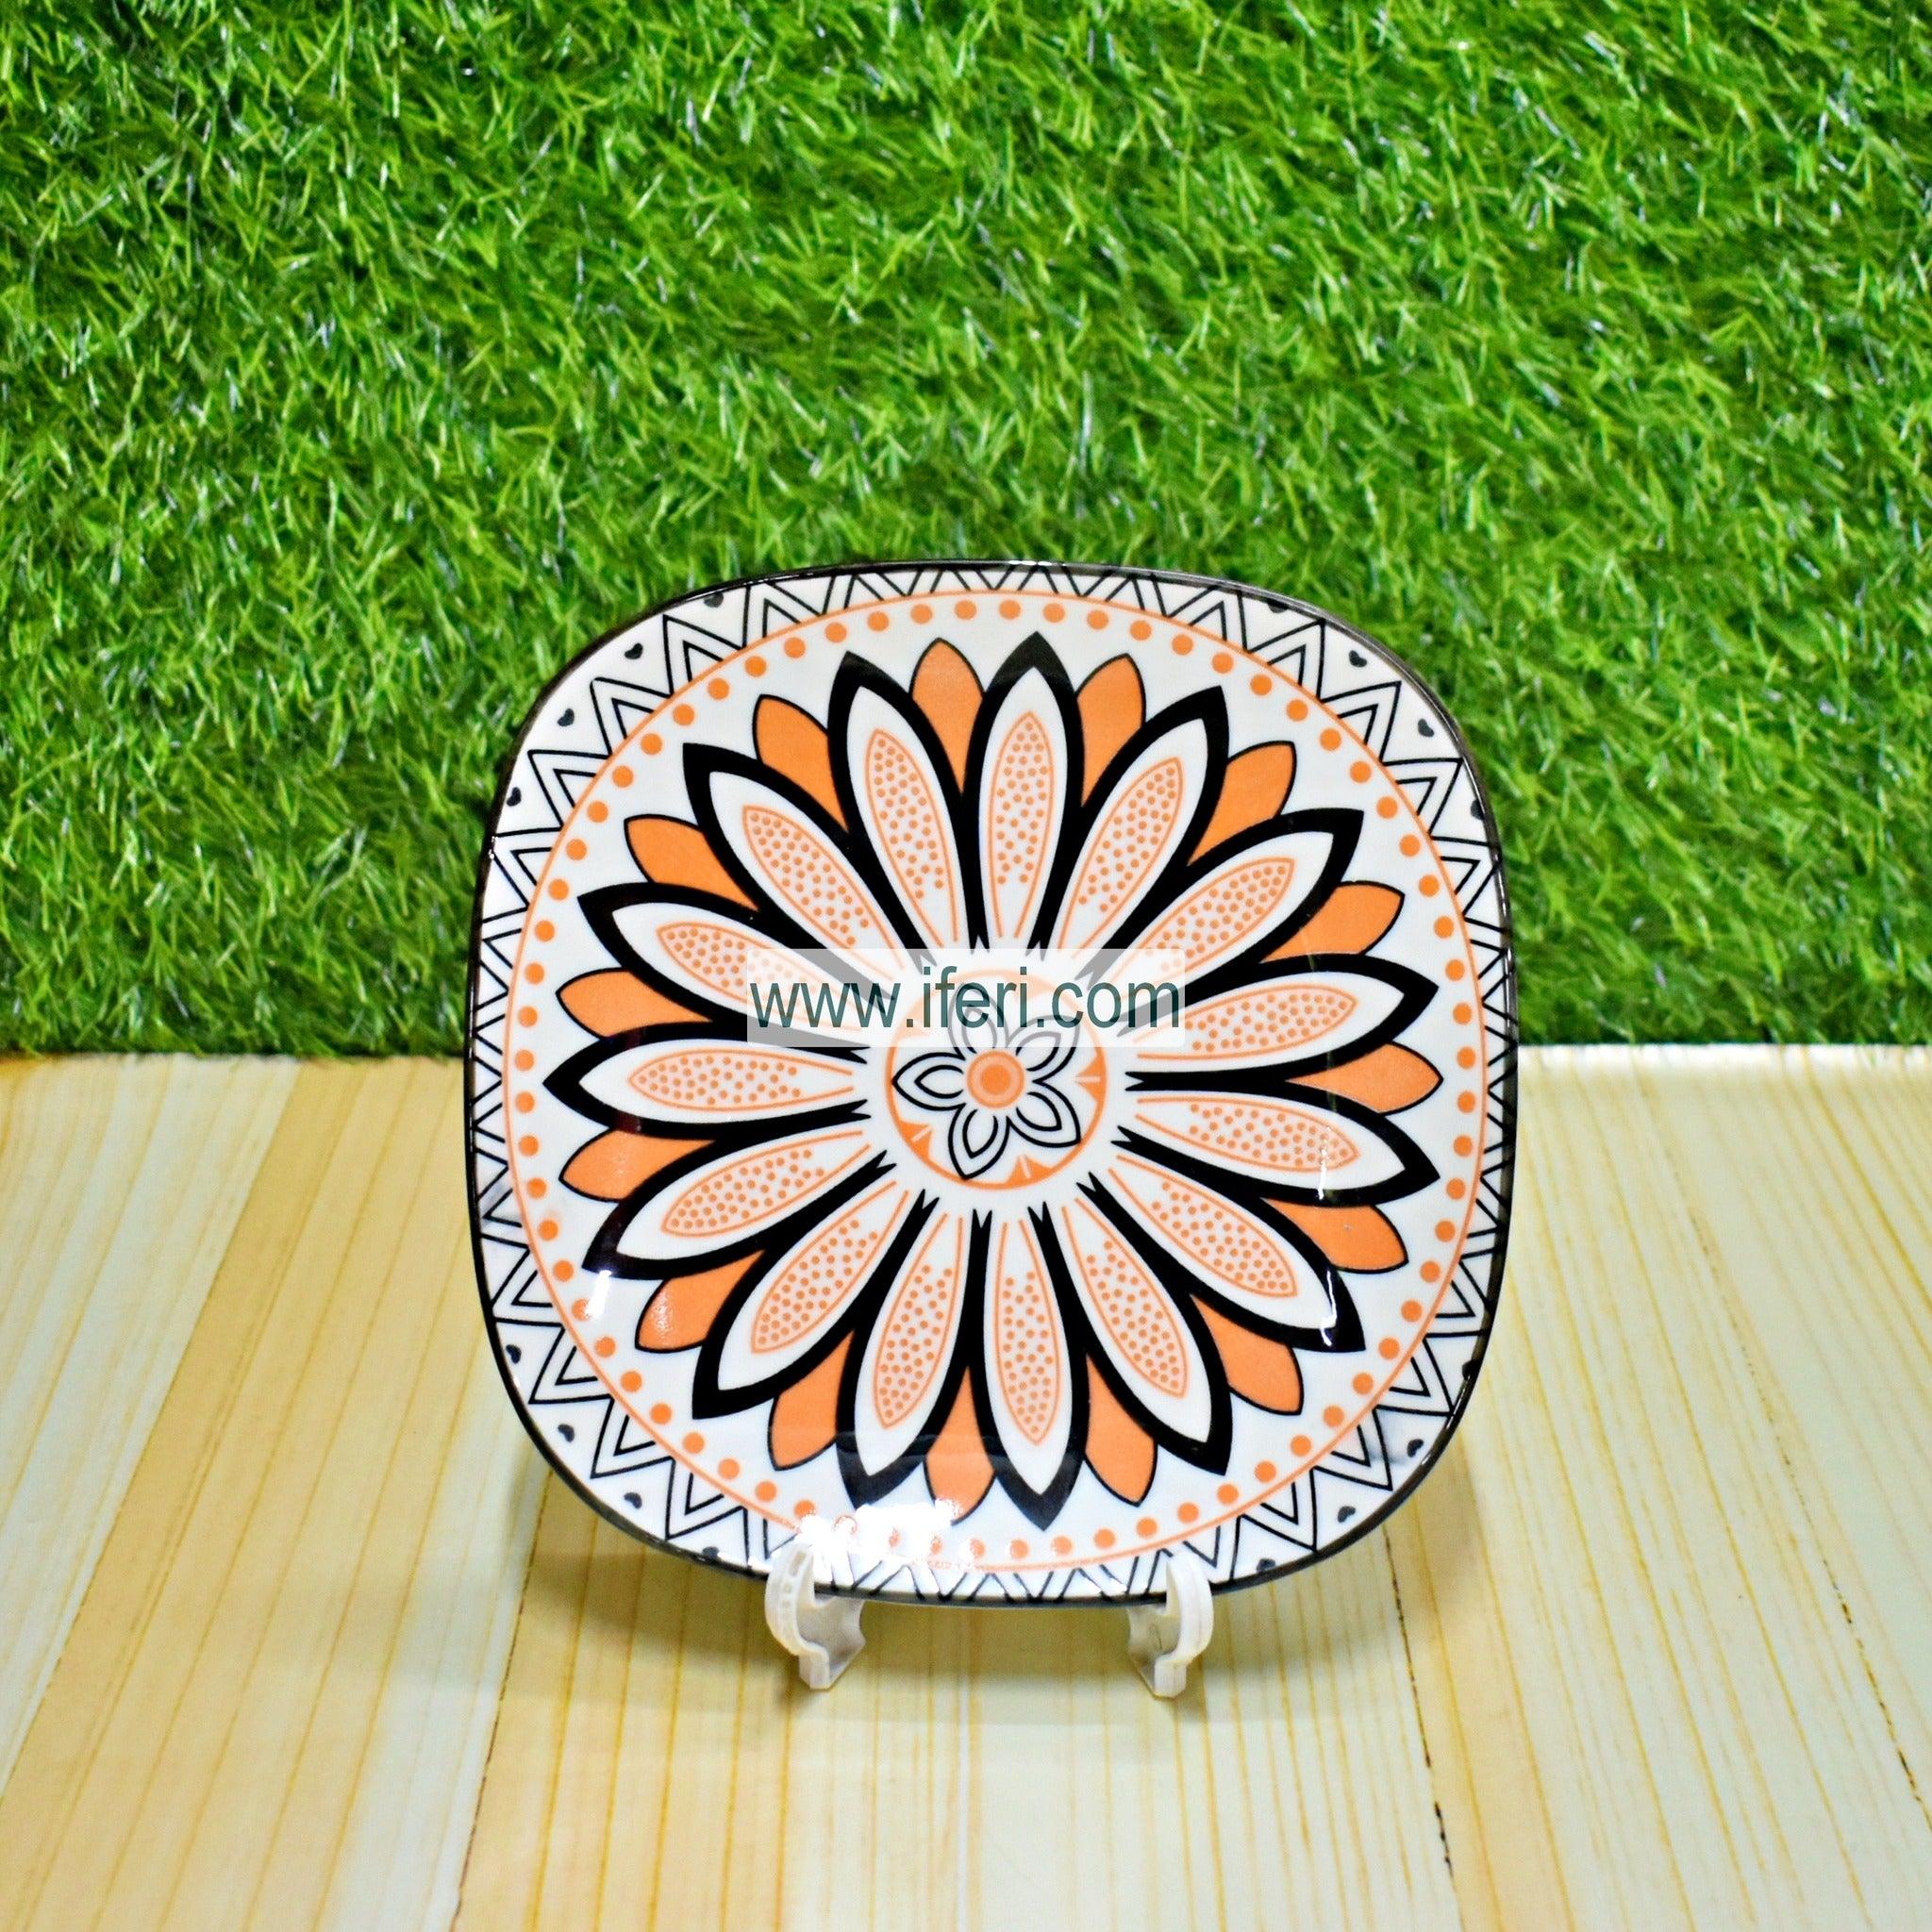 8 Inch Ceramic Half Plate SY0071 Price in Bangladesh - iferi.com